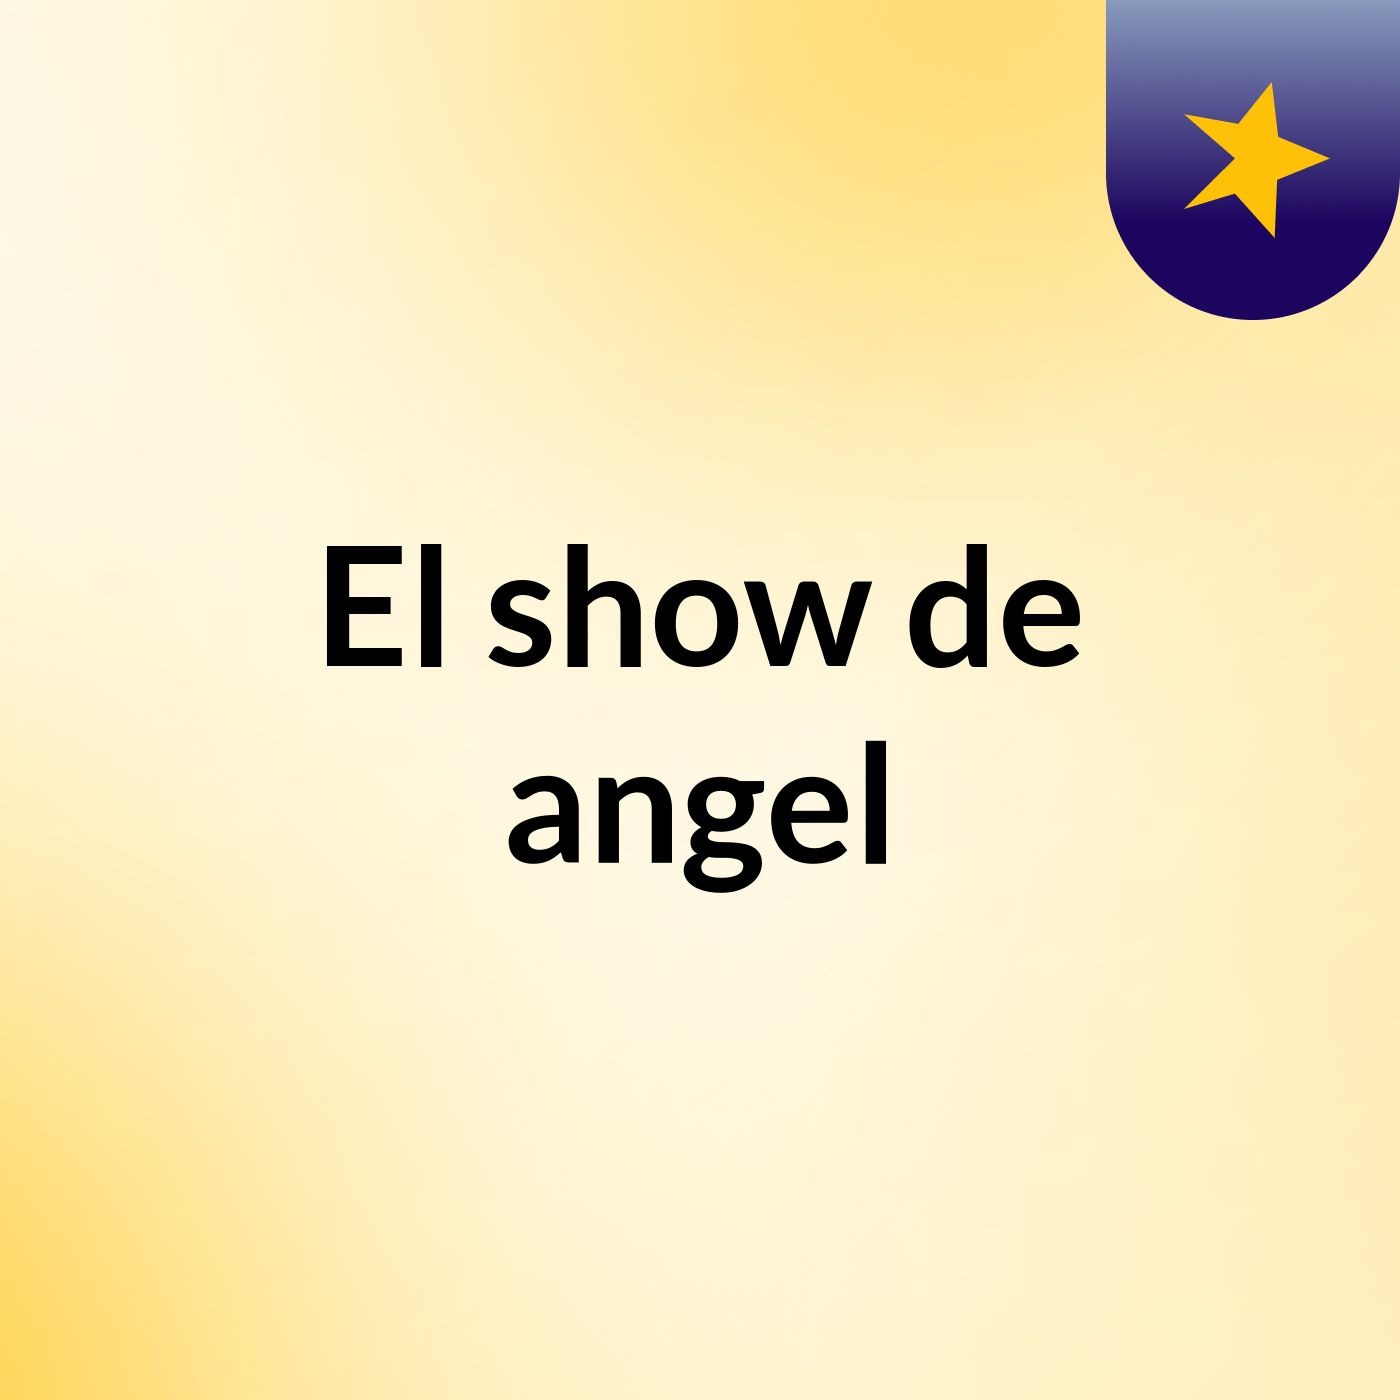 El show de angel